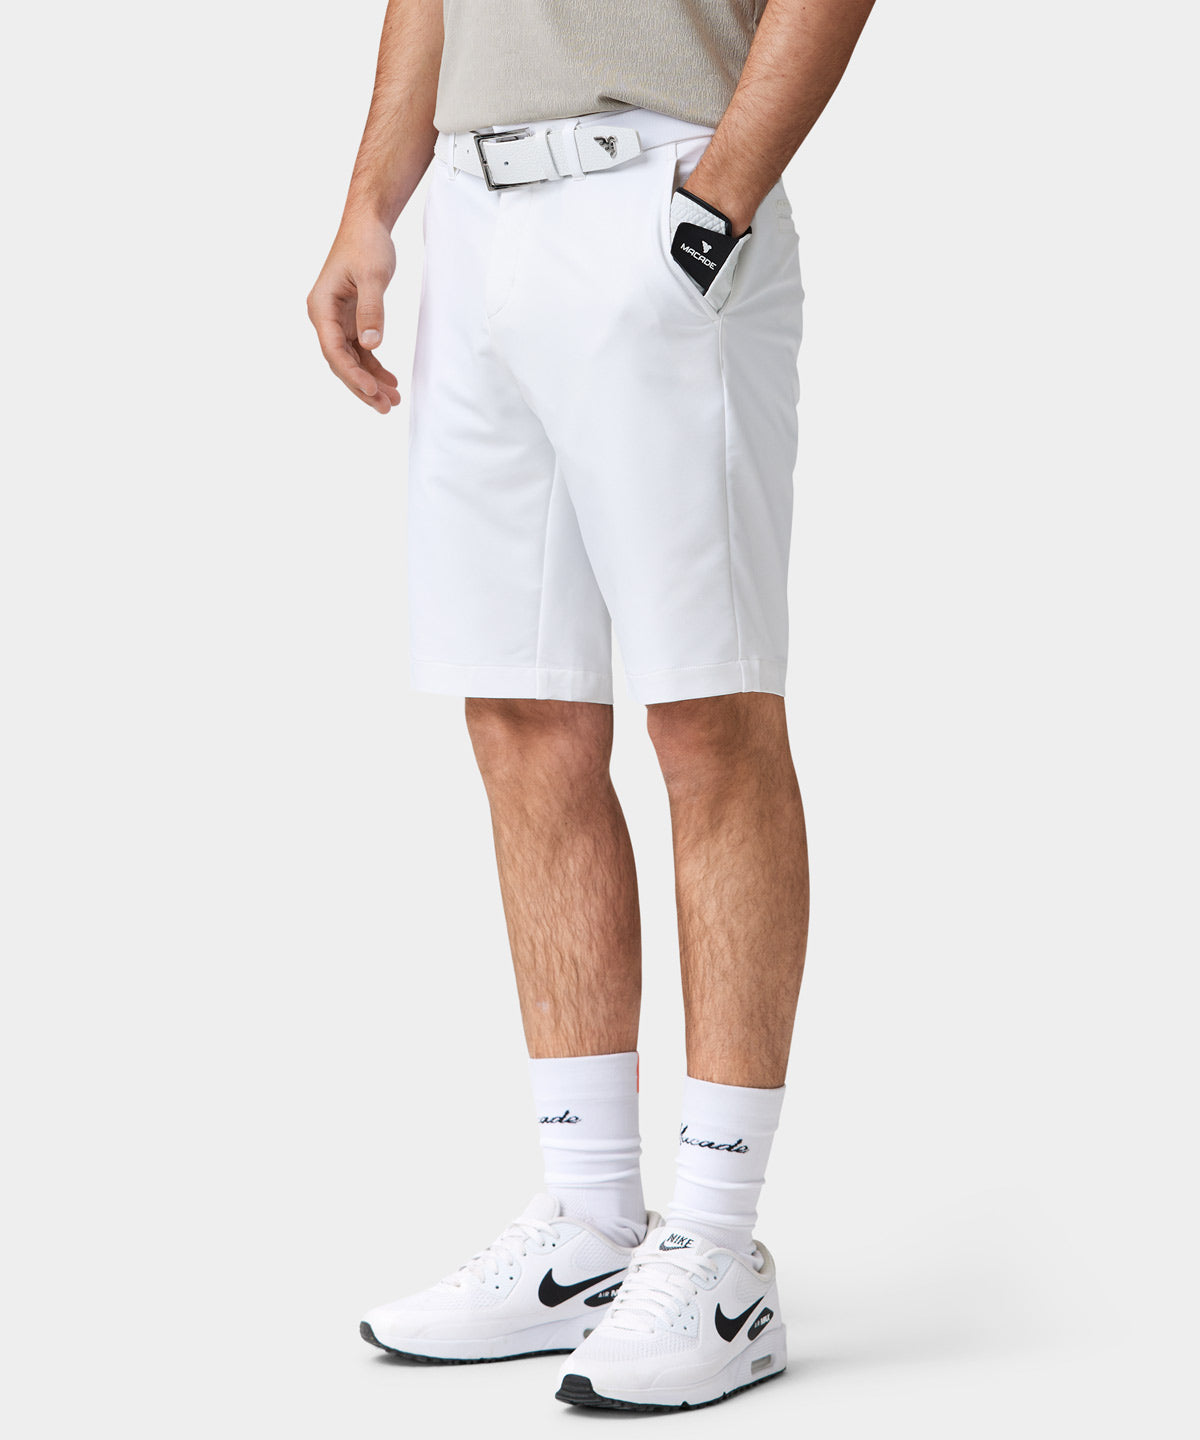 White Four-Way Stretch Shorts